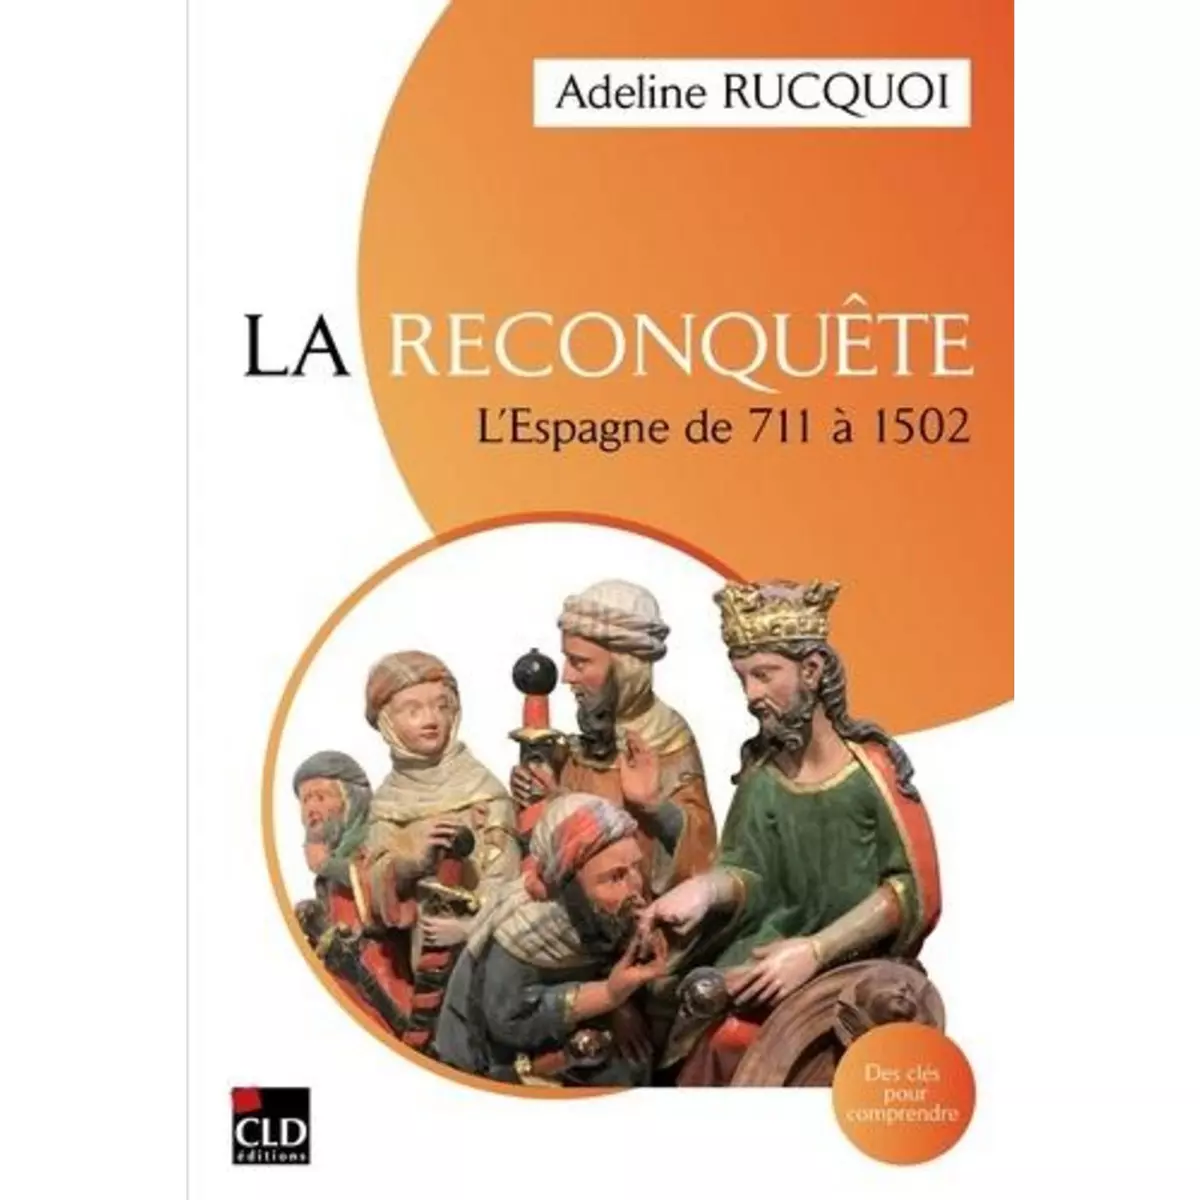  LA RECONQUETE. L'ESPAGNE DE 711 A 1502, Rucquoi Adeline